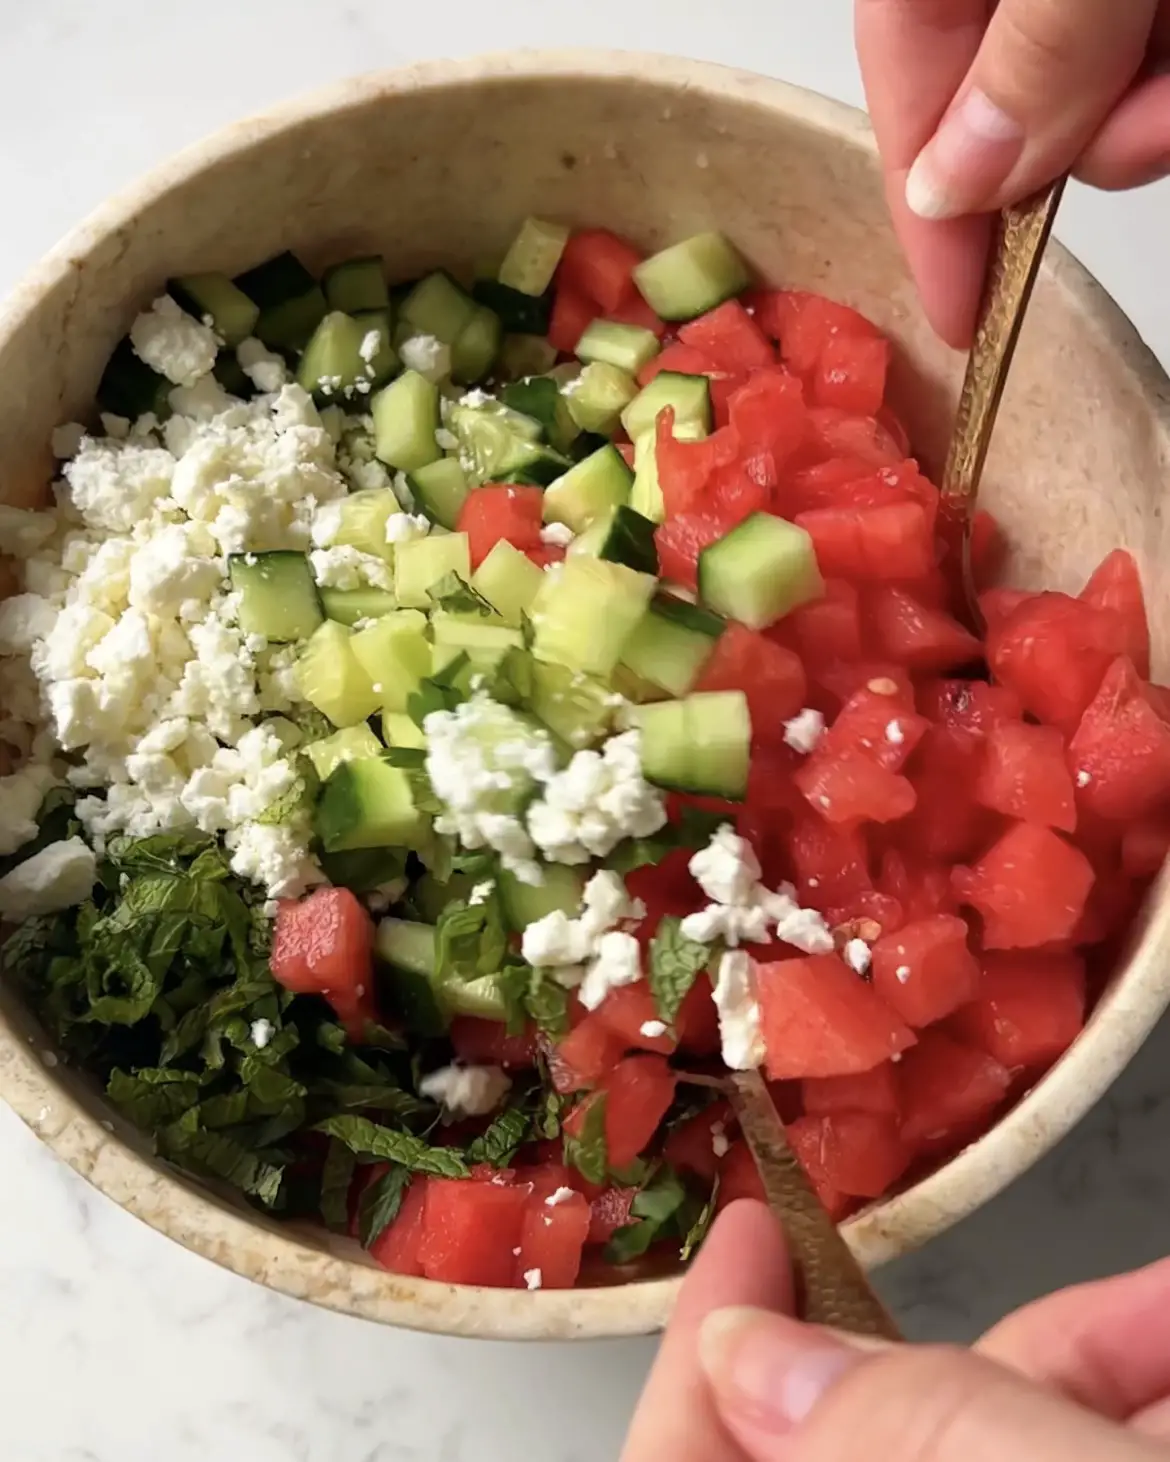 mix the watermelon feta salad